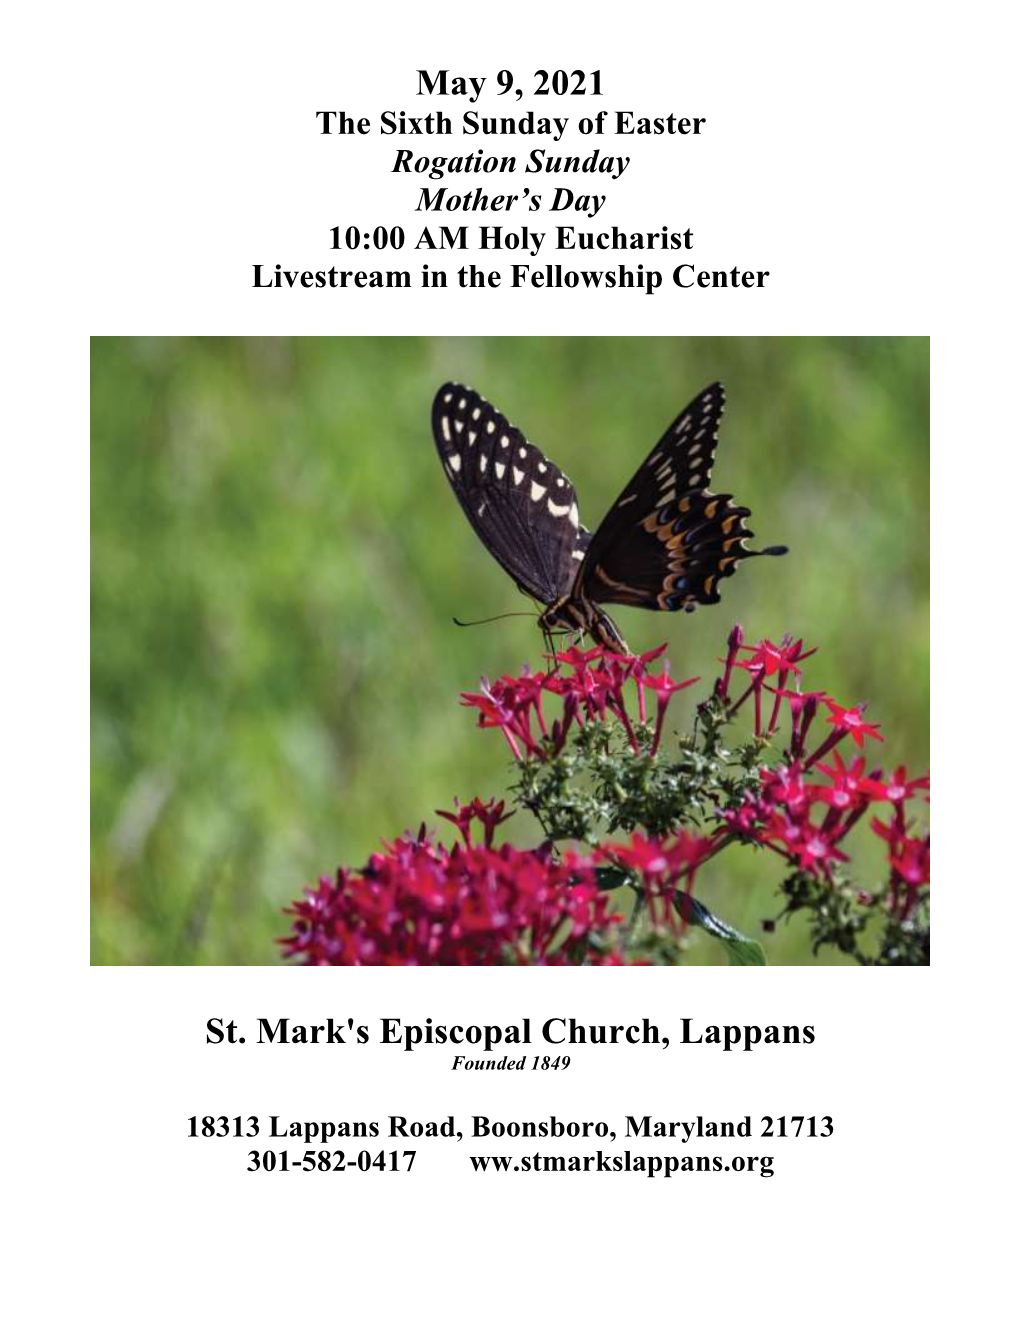 May 9, 2021 St. Mark's Episcopal Church, Lappans